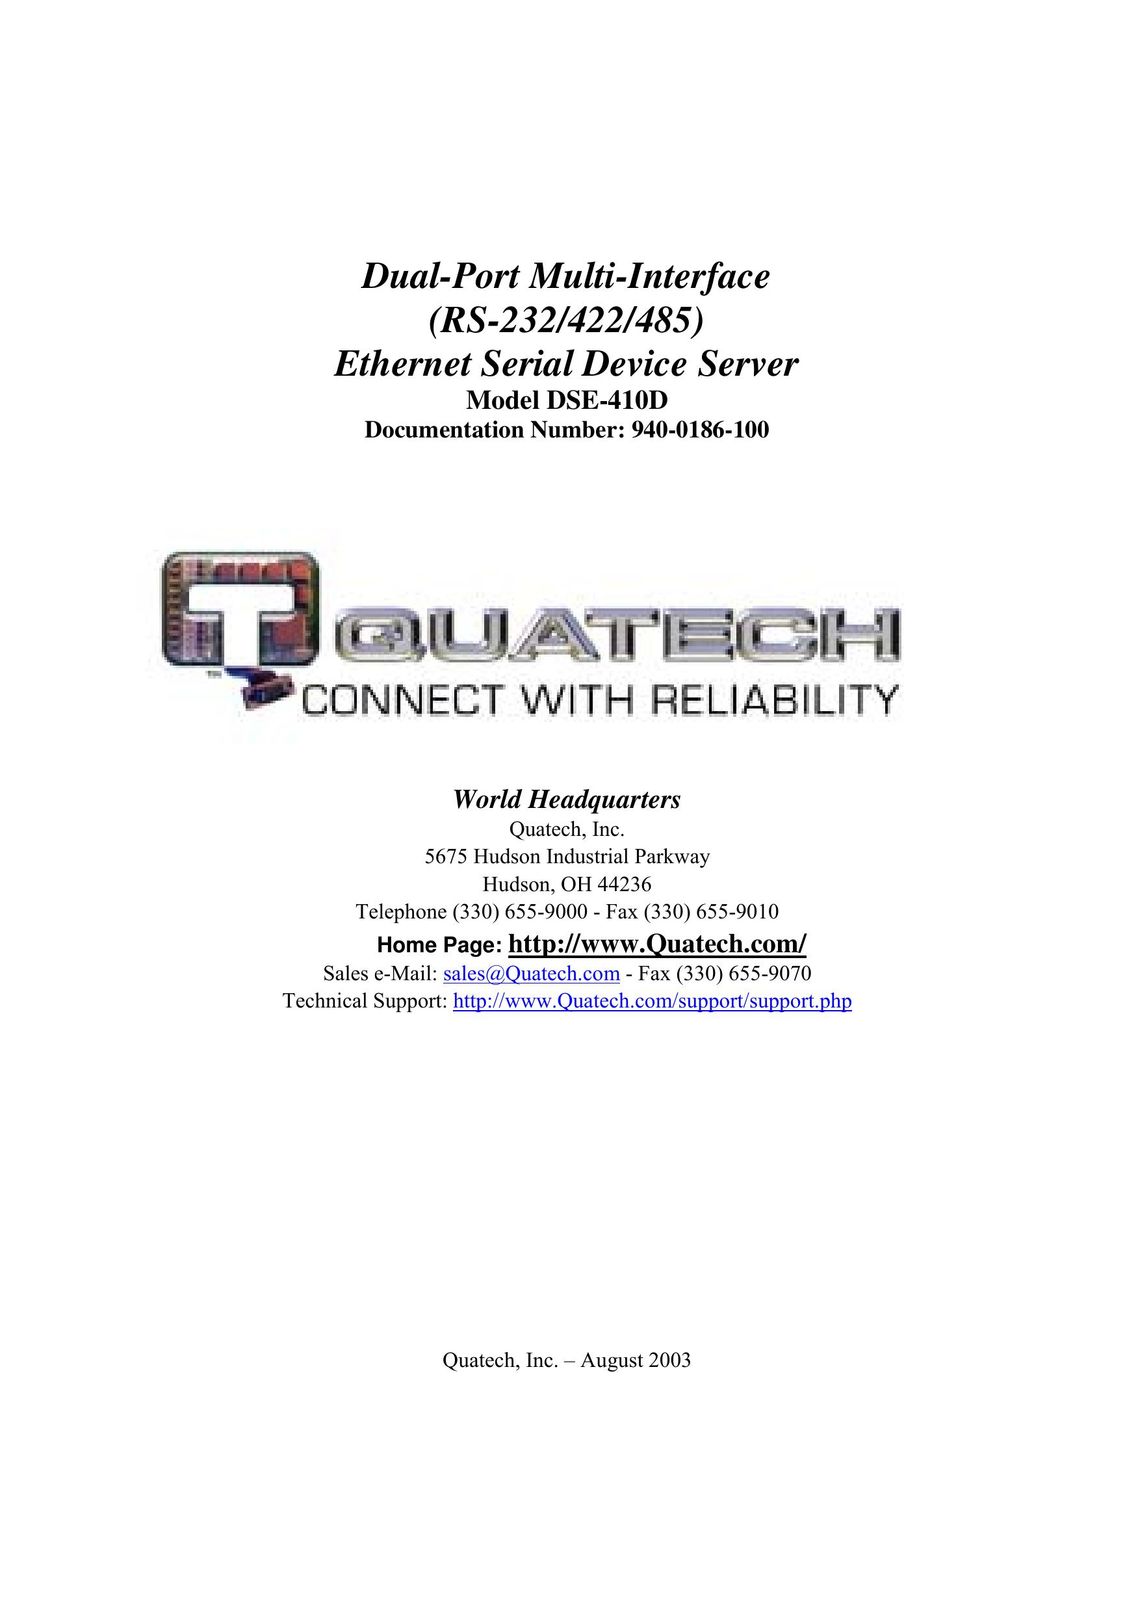 Quatech DSE-410D Network Card User Manual